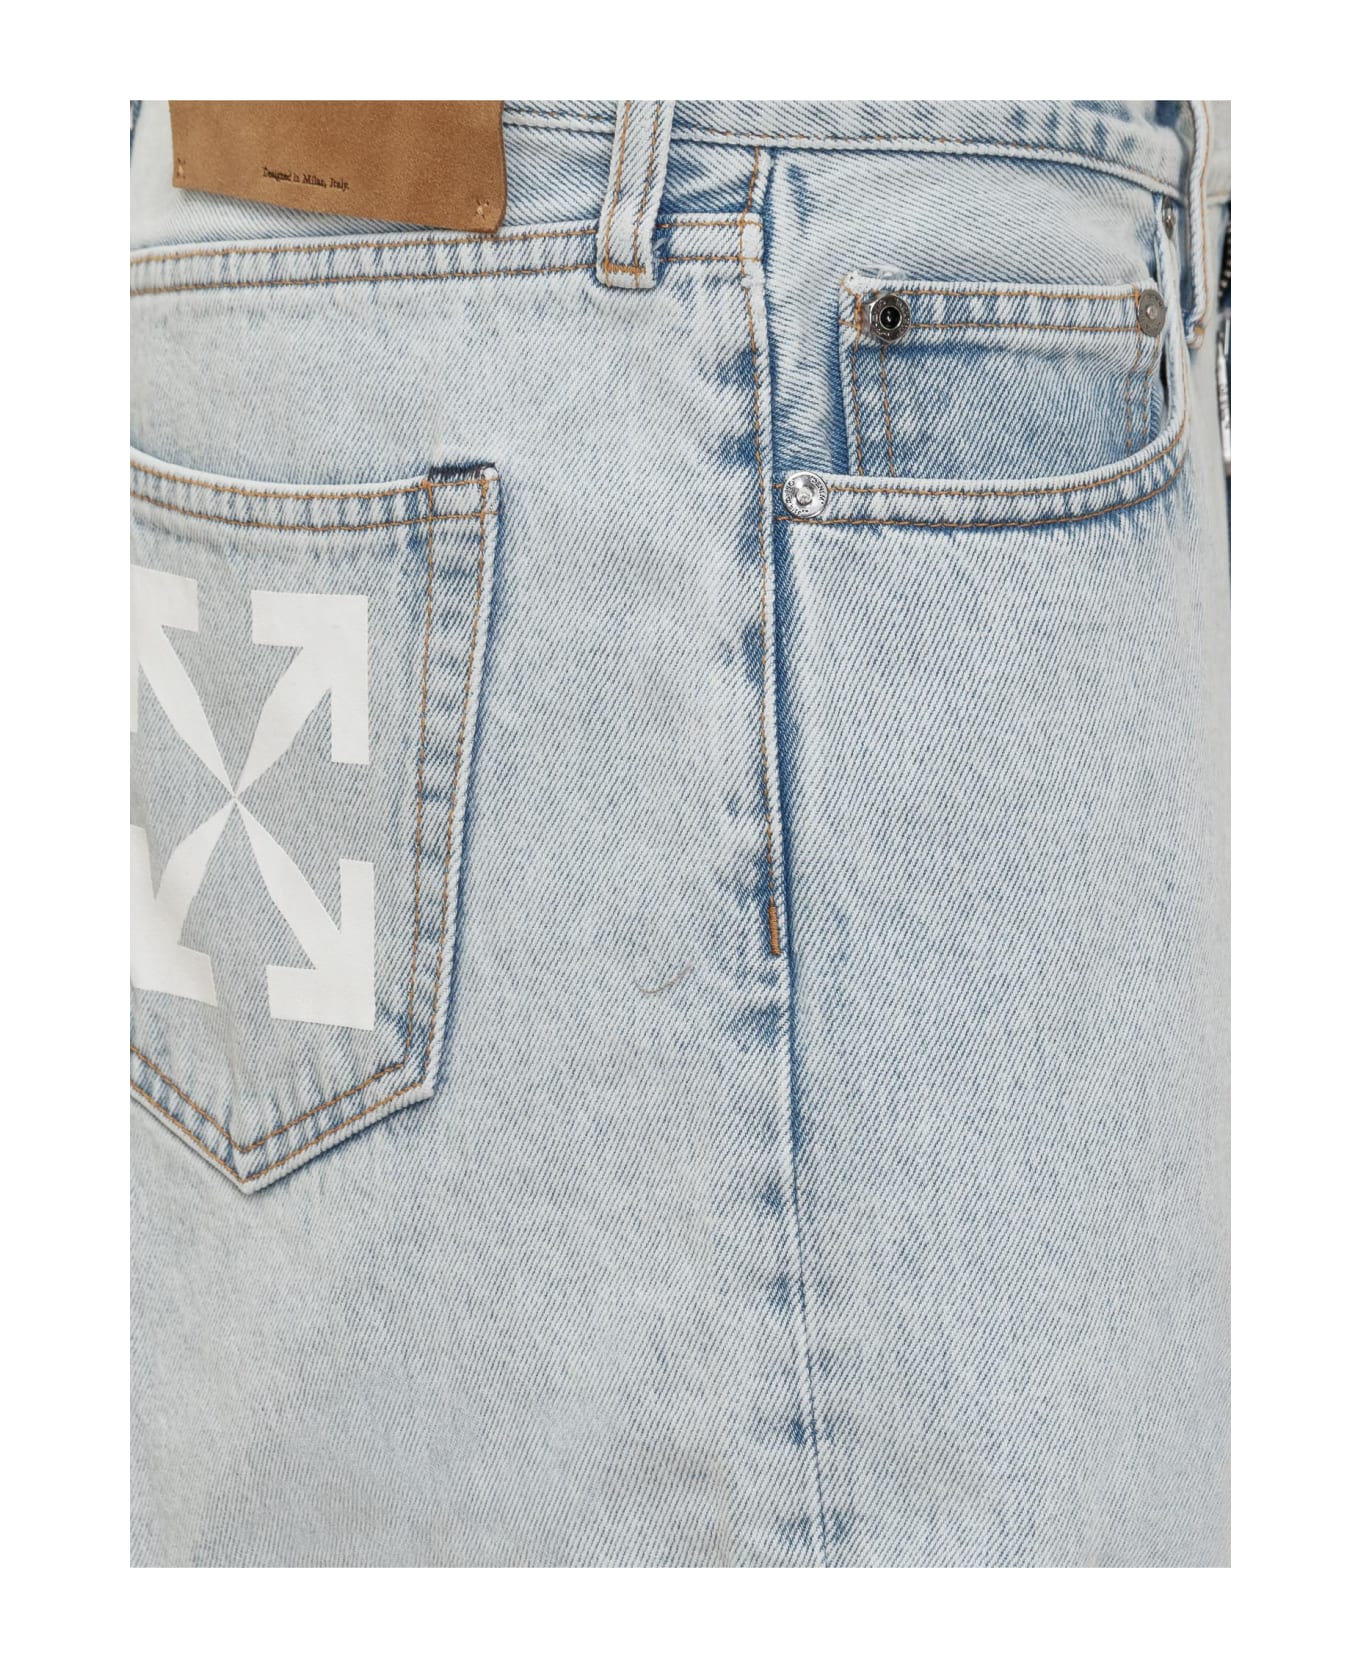 Off-White Single Arrow Shorts Jeans - BEACH BLUE